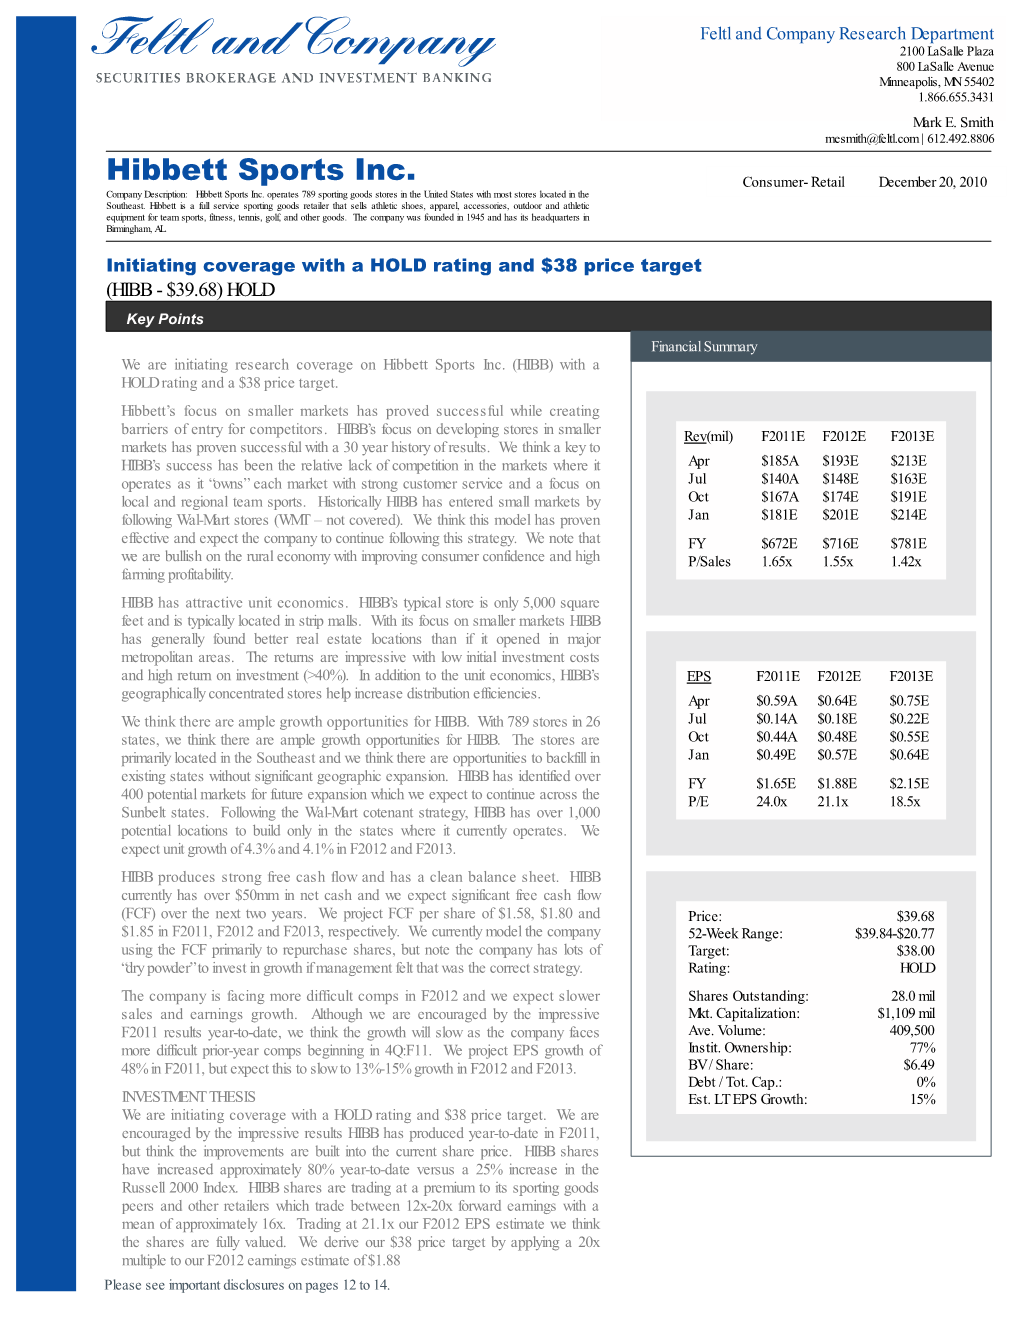 Hibbett Sports Inc. Consumer- Retail December 20, 2010 Company Description: Hibbett Sports Inc